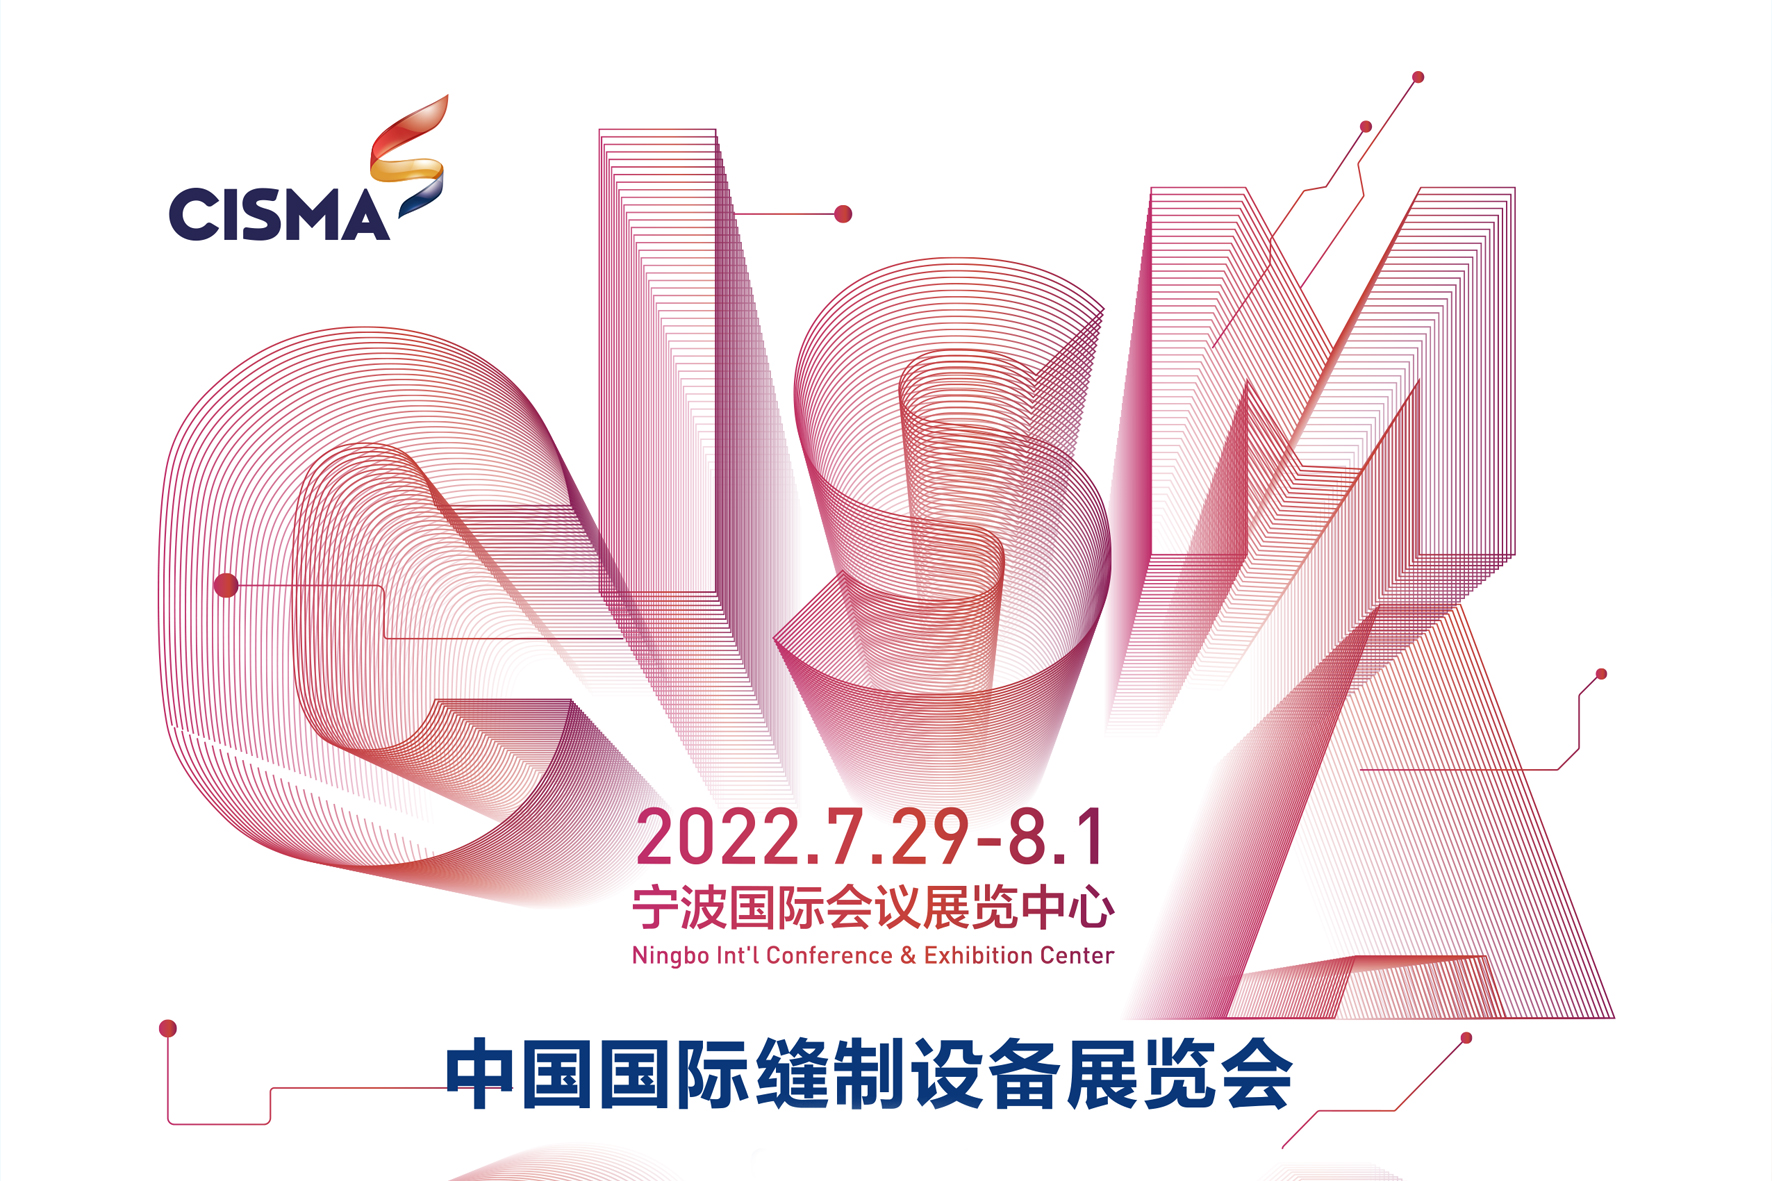 Cisma2021 comes to a successful conc...